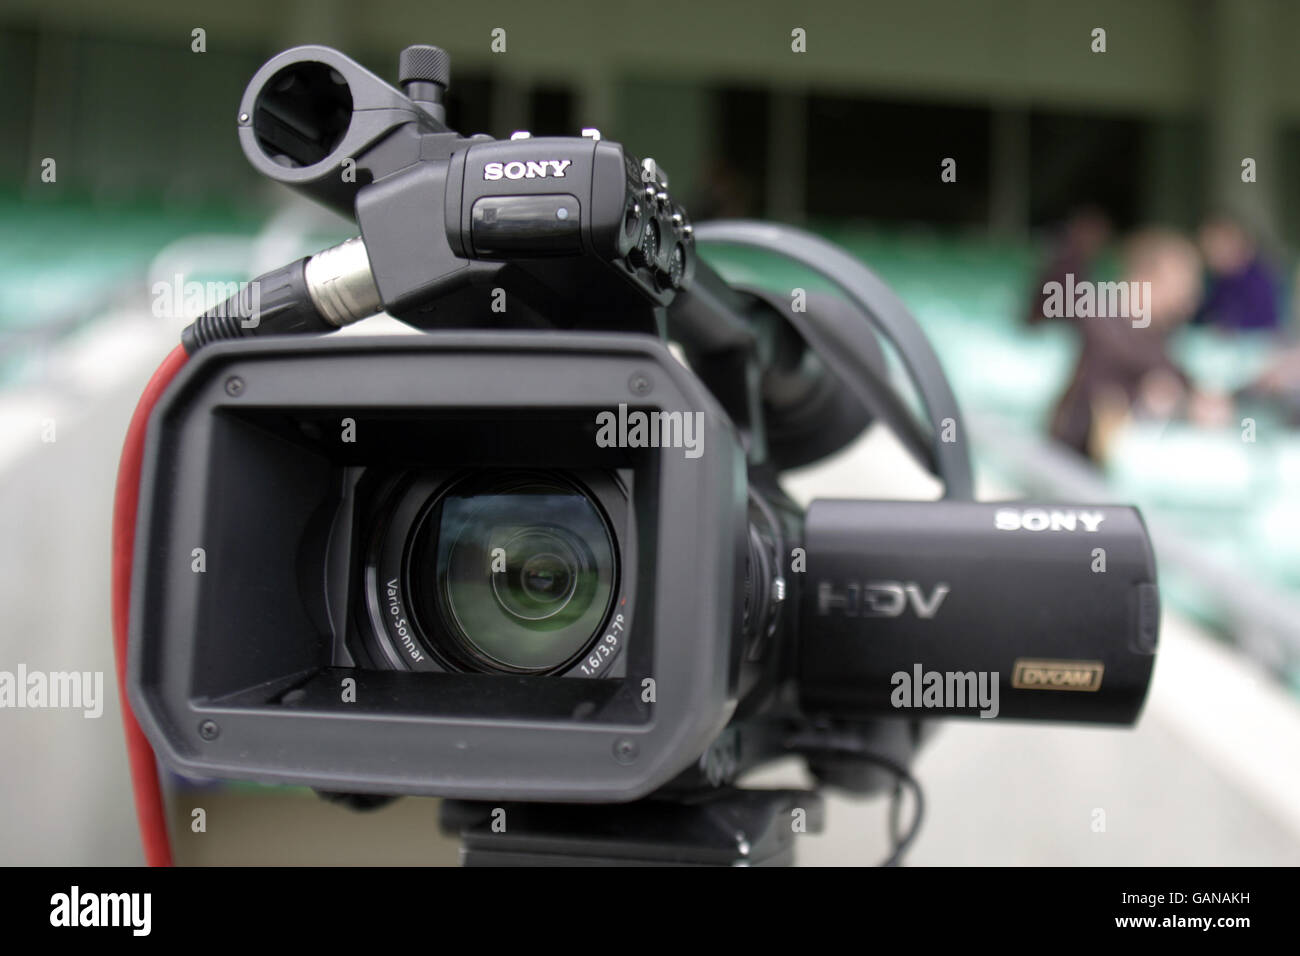 Cámara de video sony fotografías e imágenes de alta resolución - Alamy